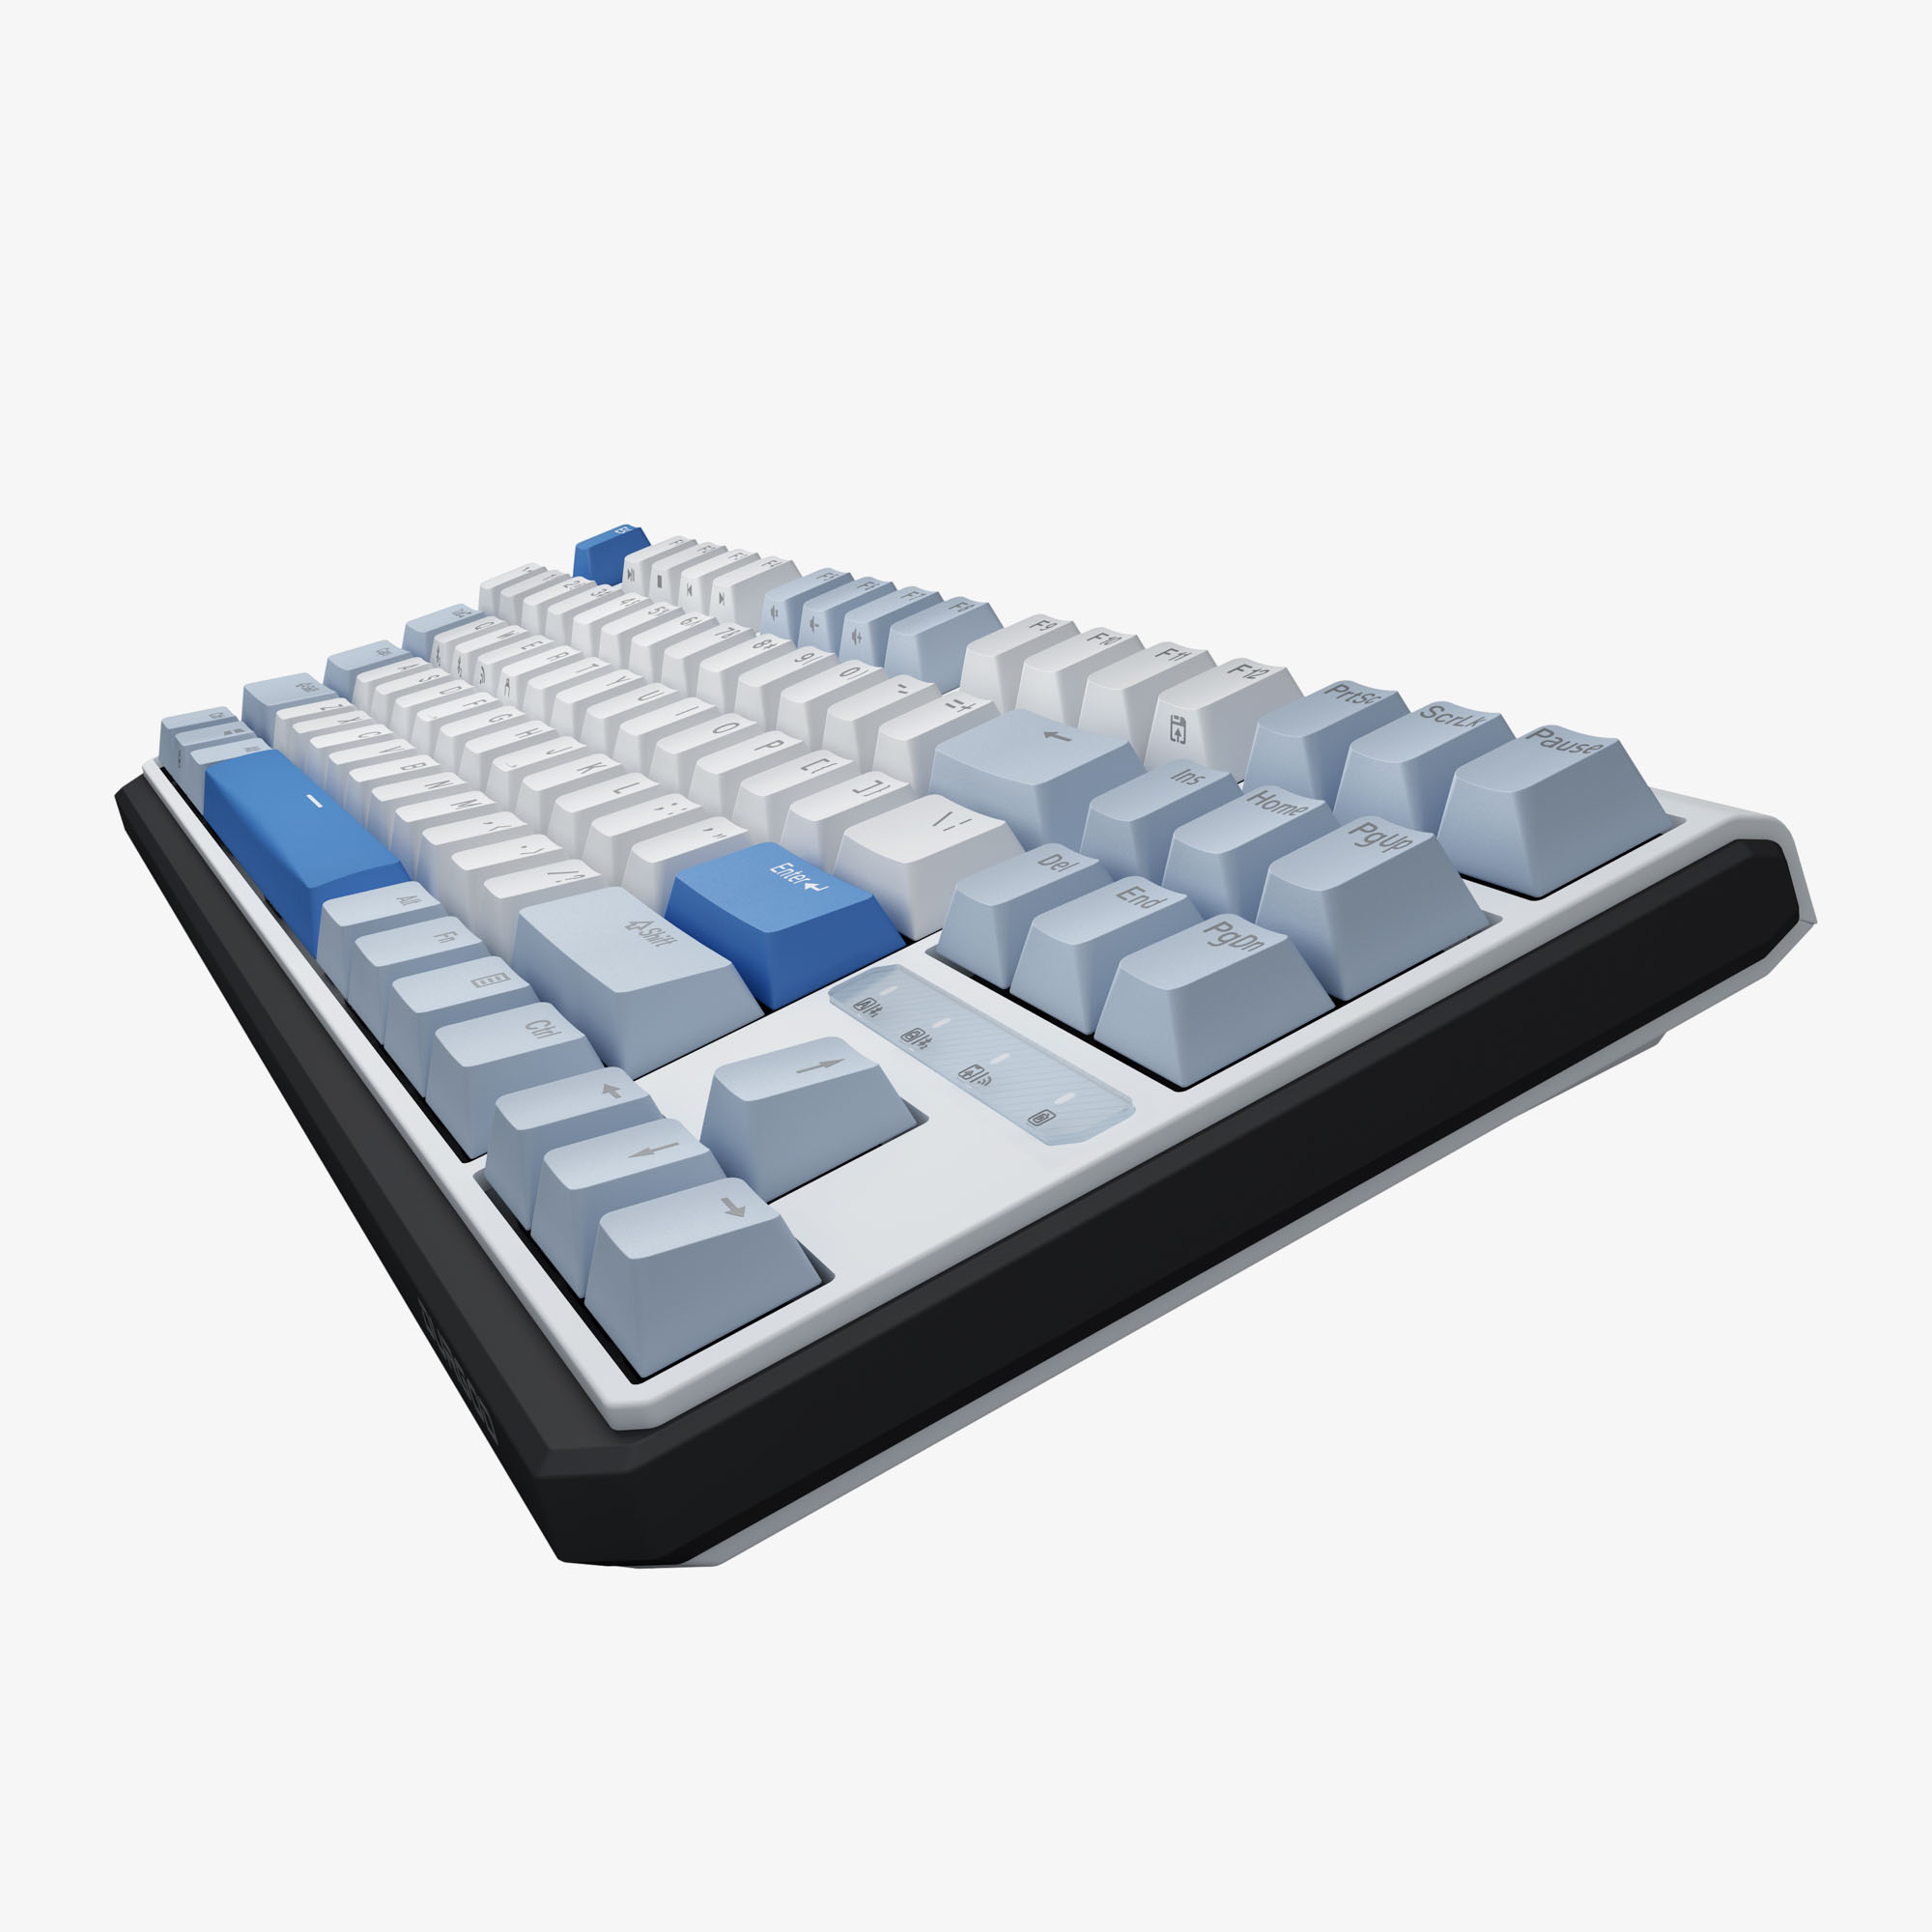 Durgod Blue Mechanical Keyboard | K620